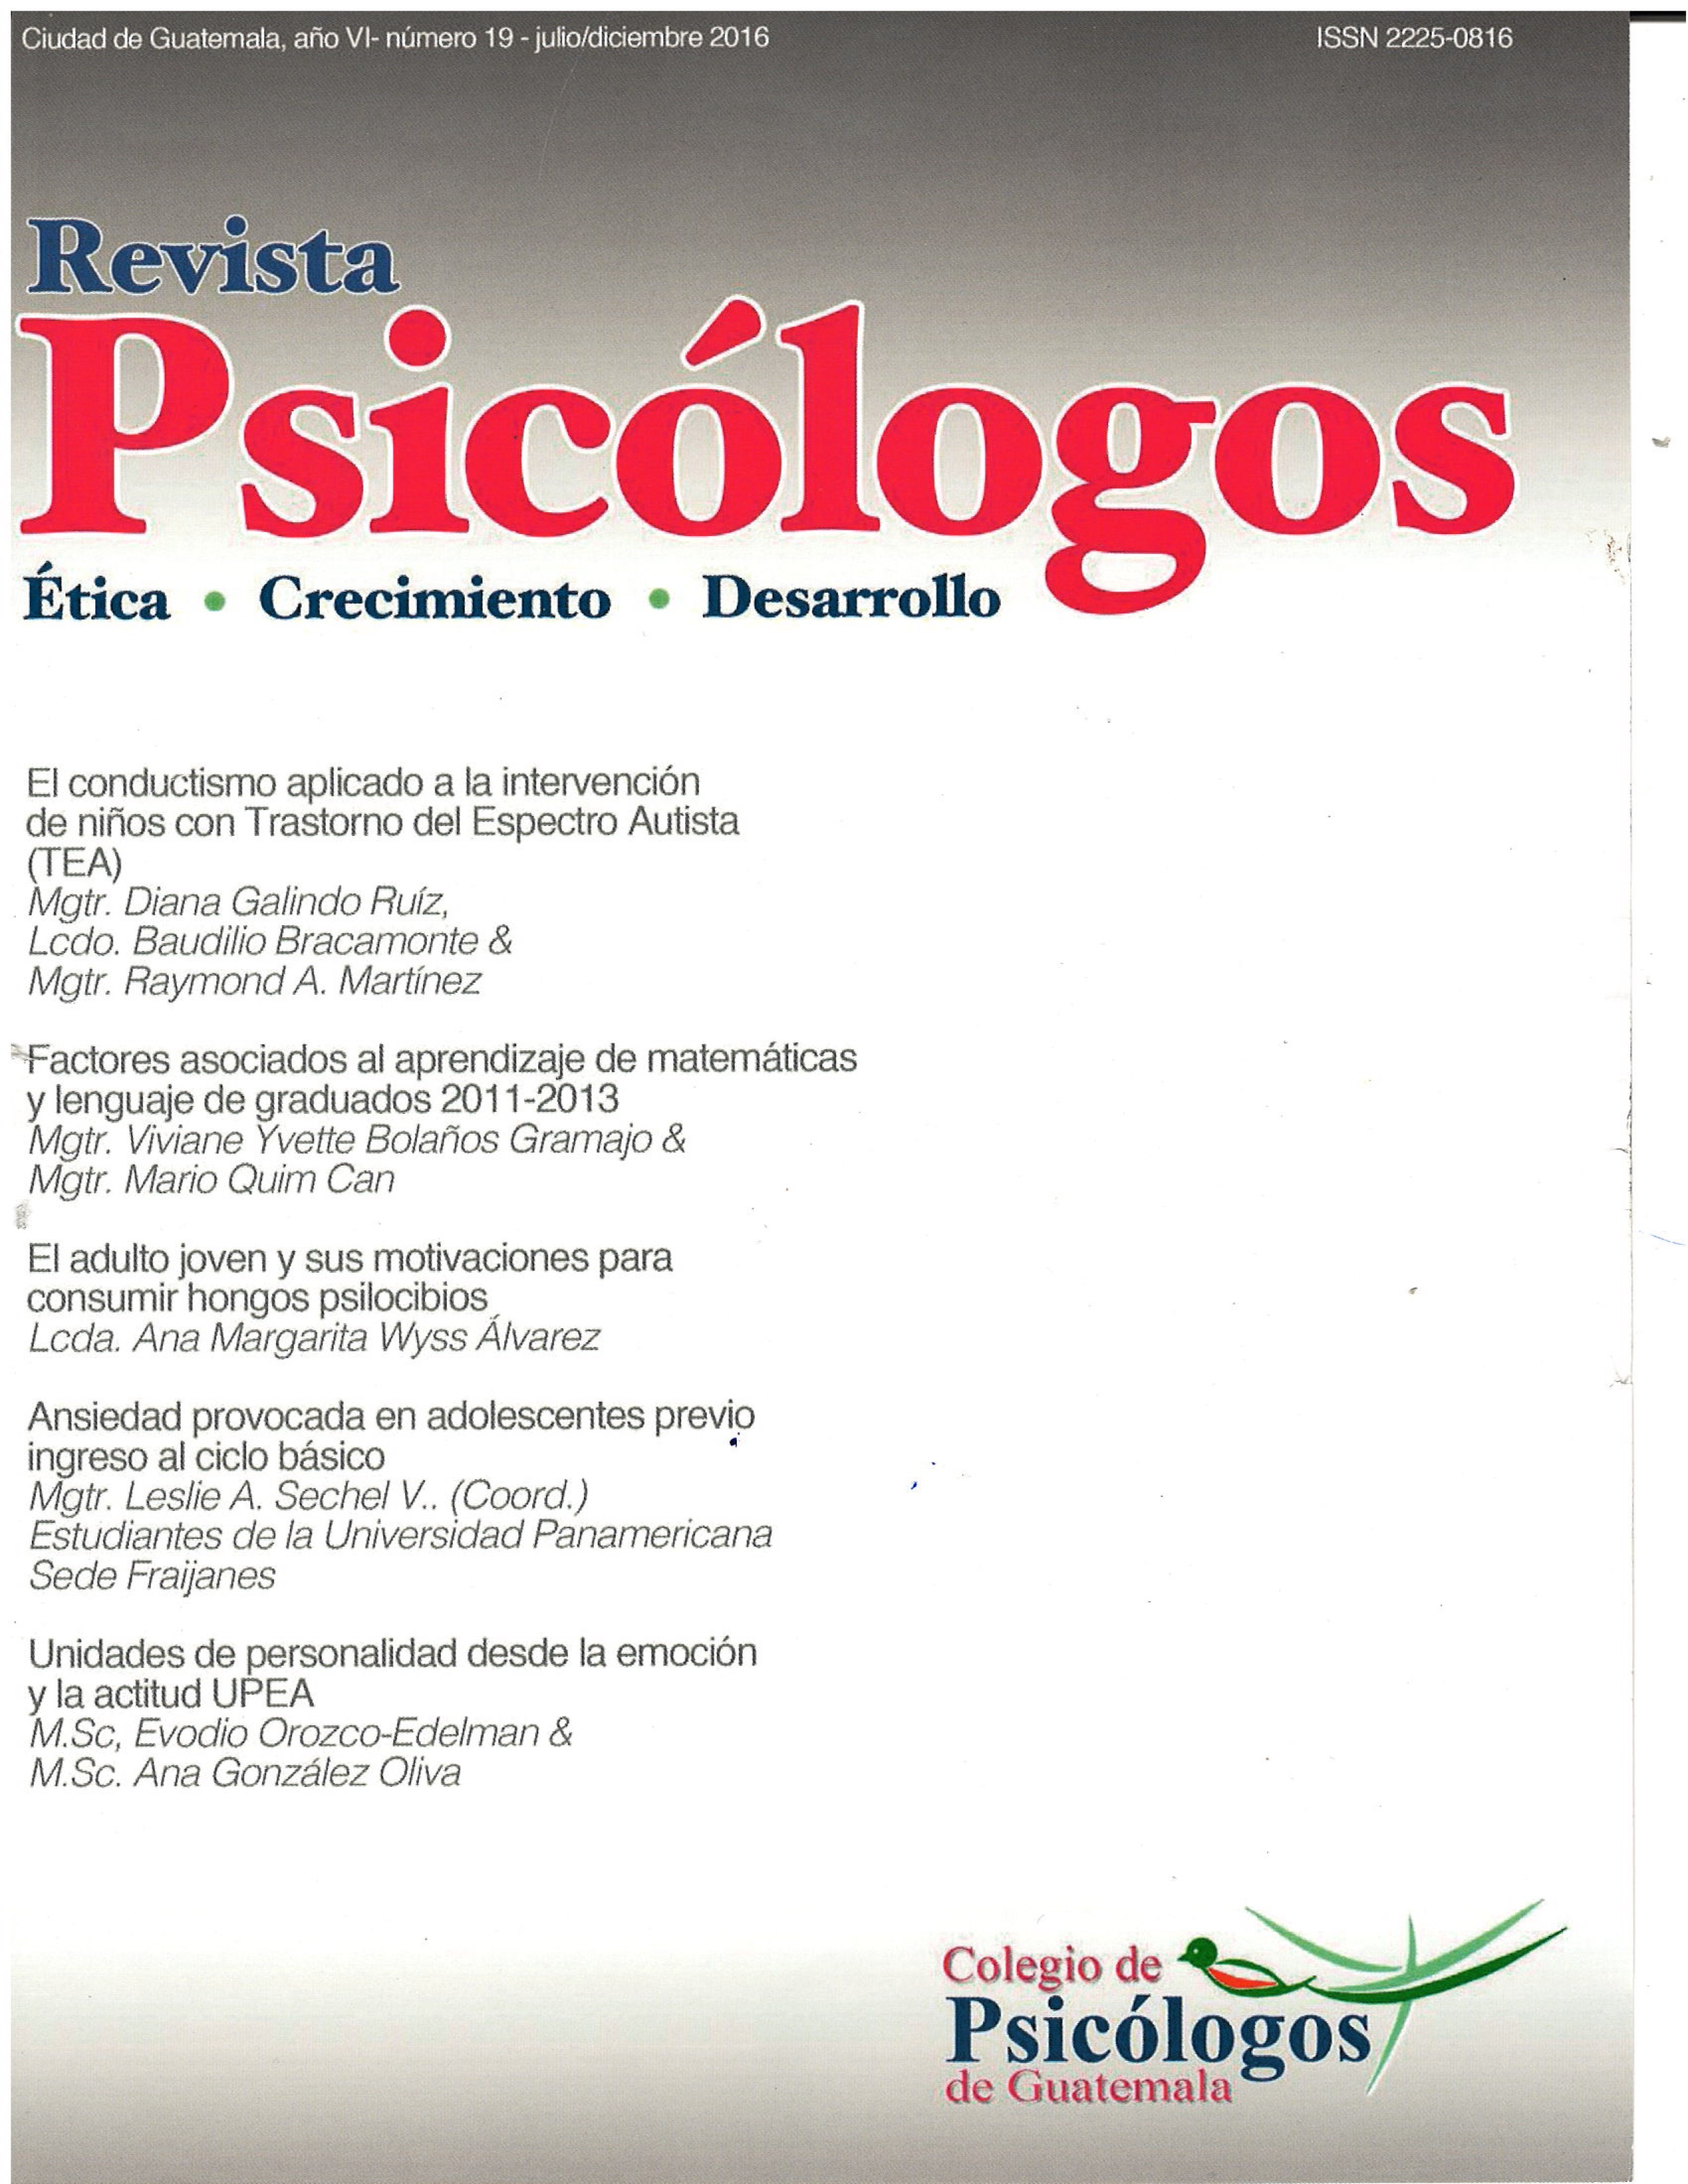 					Ver Vol. 6 Núm. 19 (2016): Revista Psicólogos No. 19
				